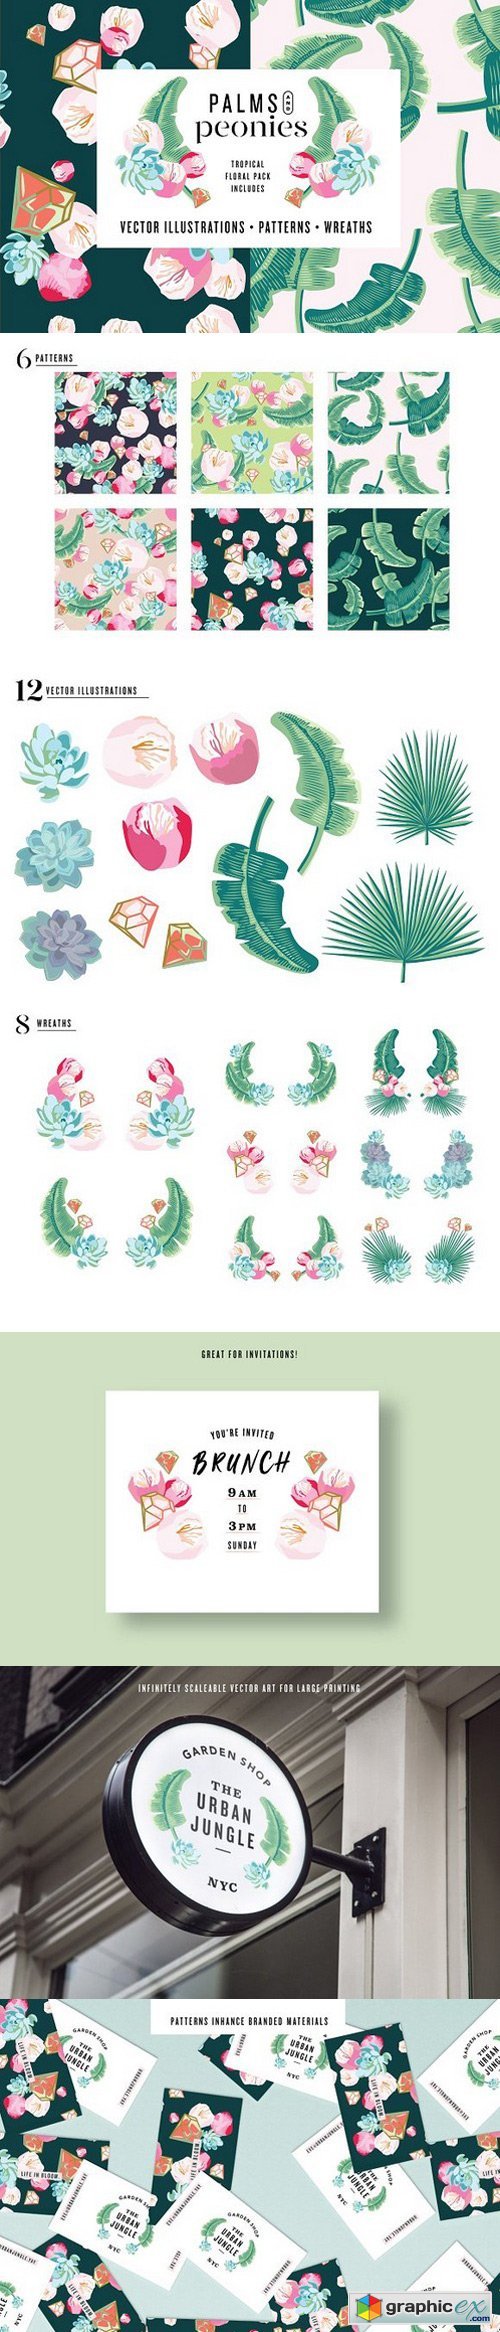 Palms Peonies Illustration Pack